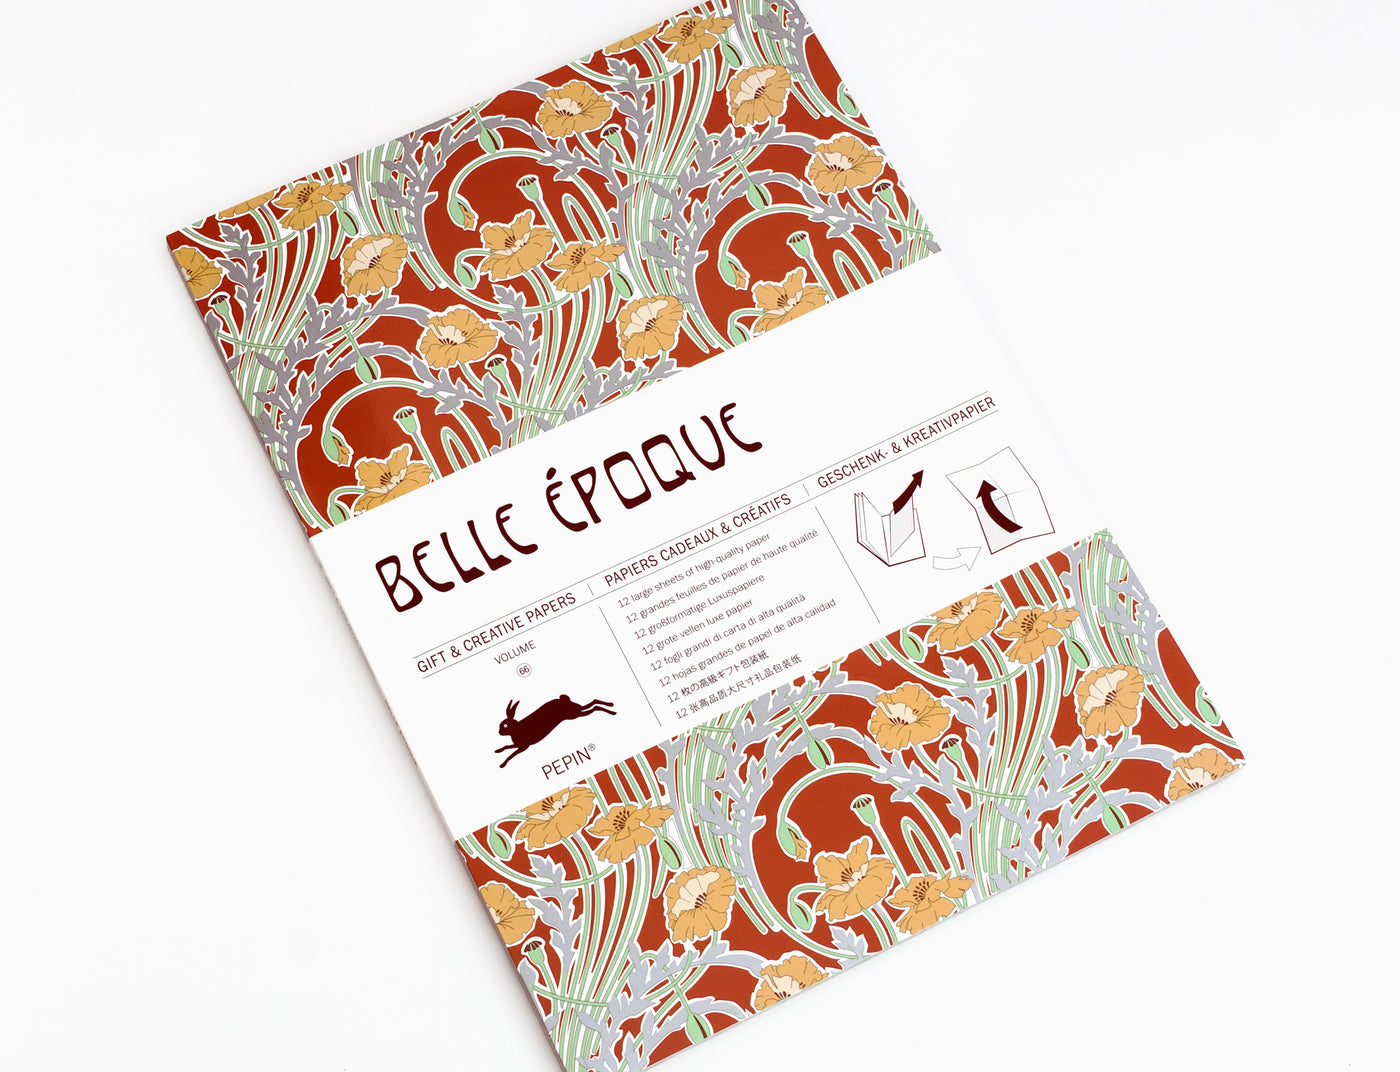 Belle Epoque Gift & Creative Paper Book